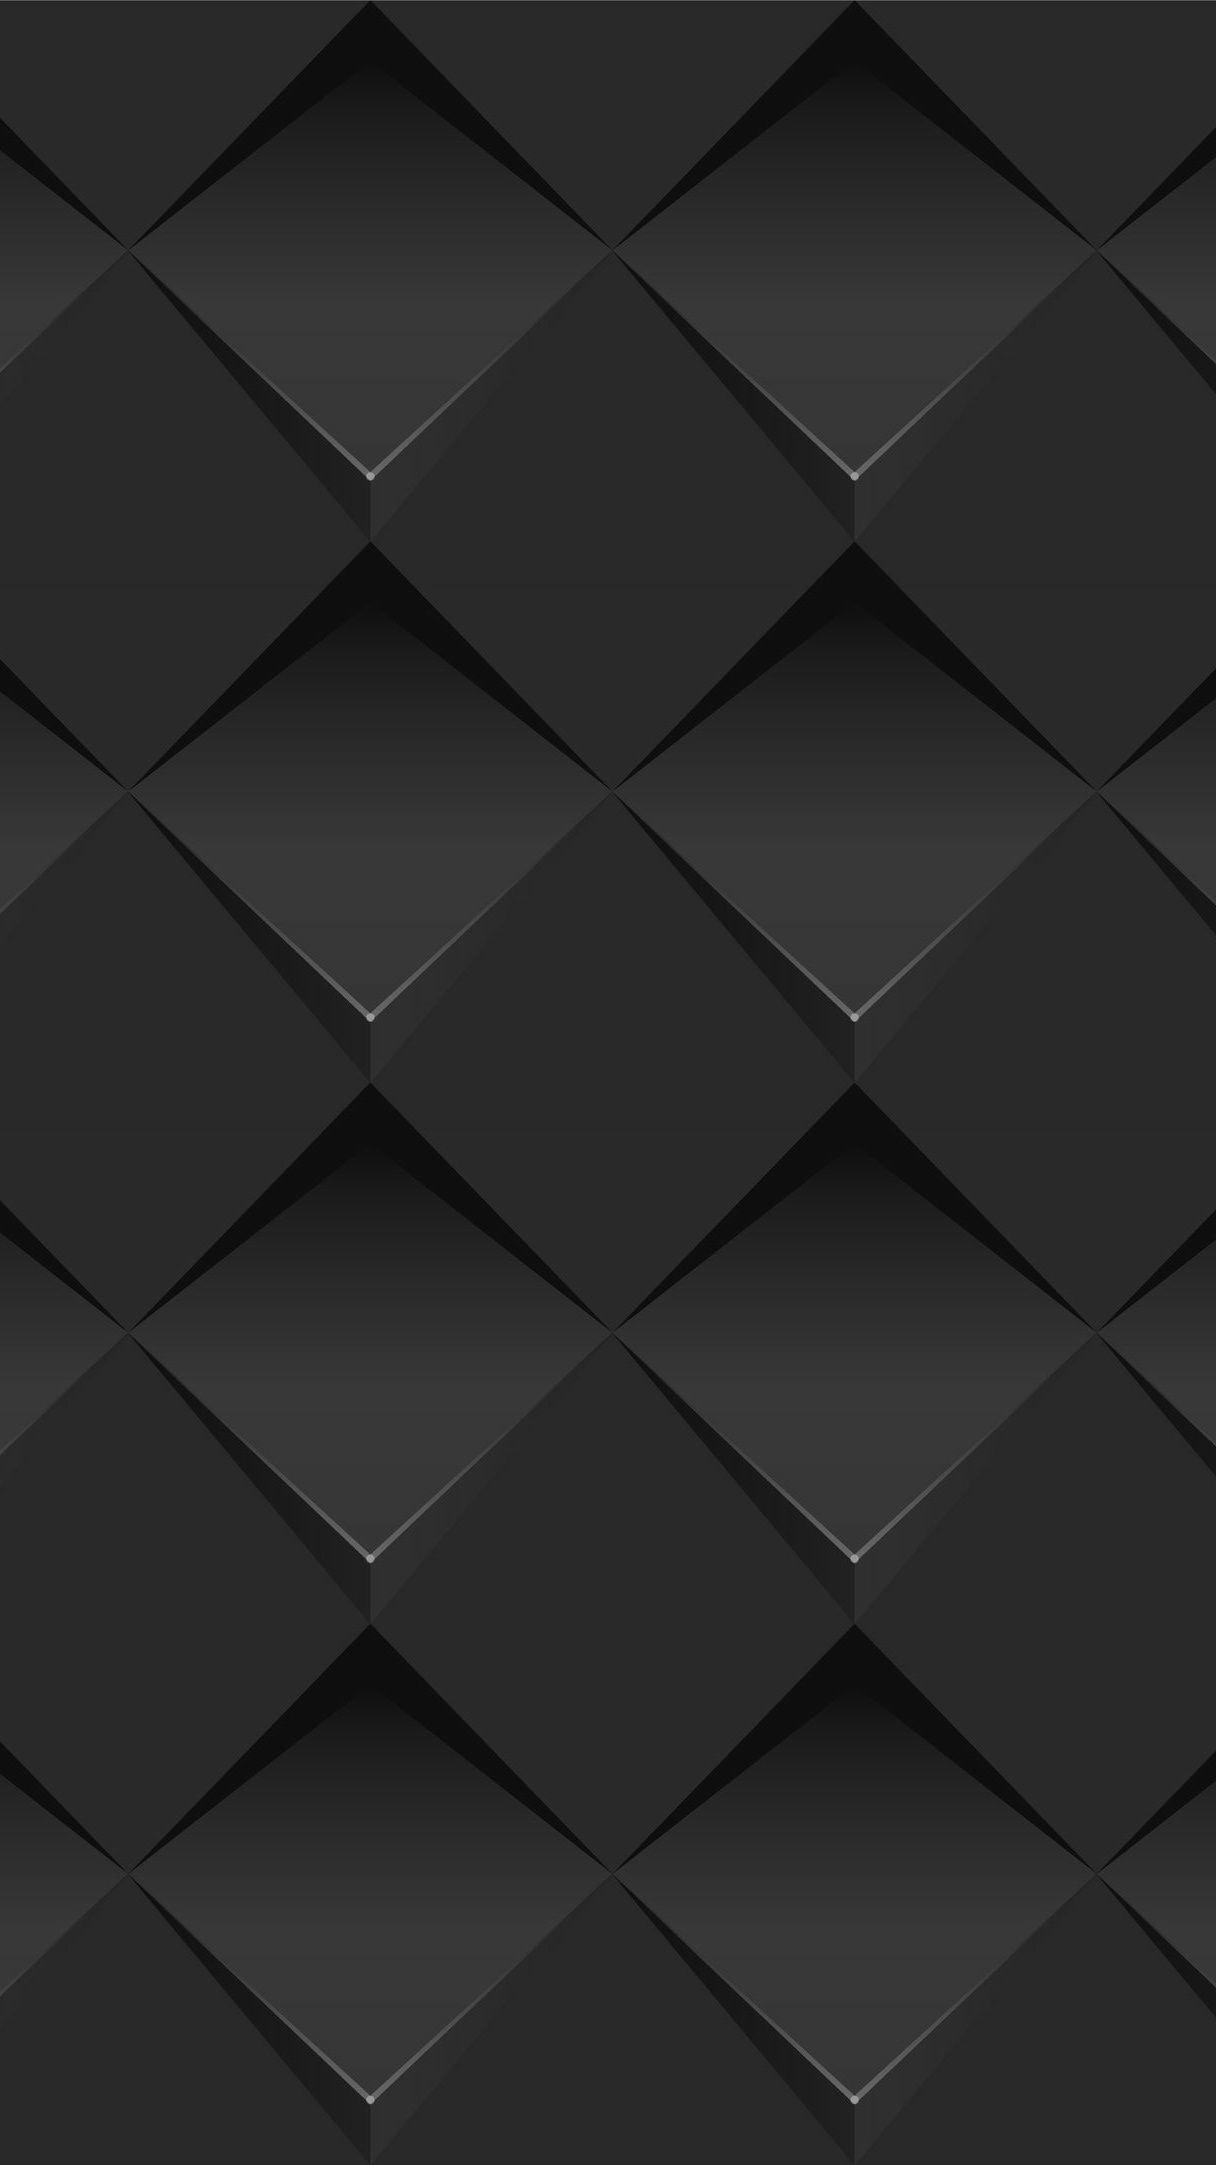 Minimal Geometric Ios Wallpapers